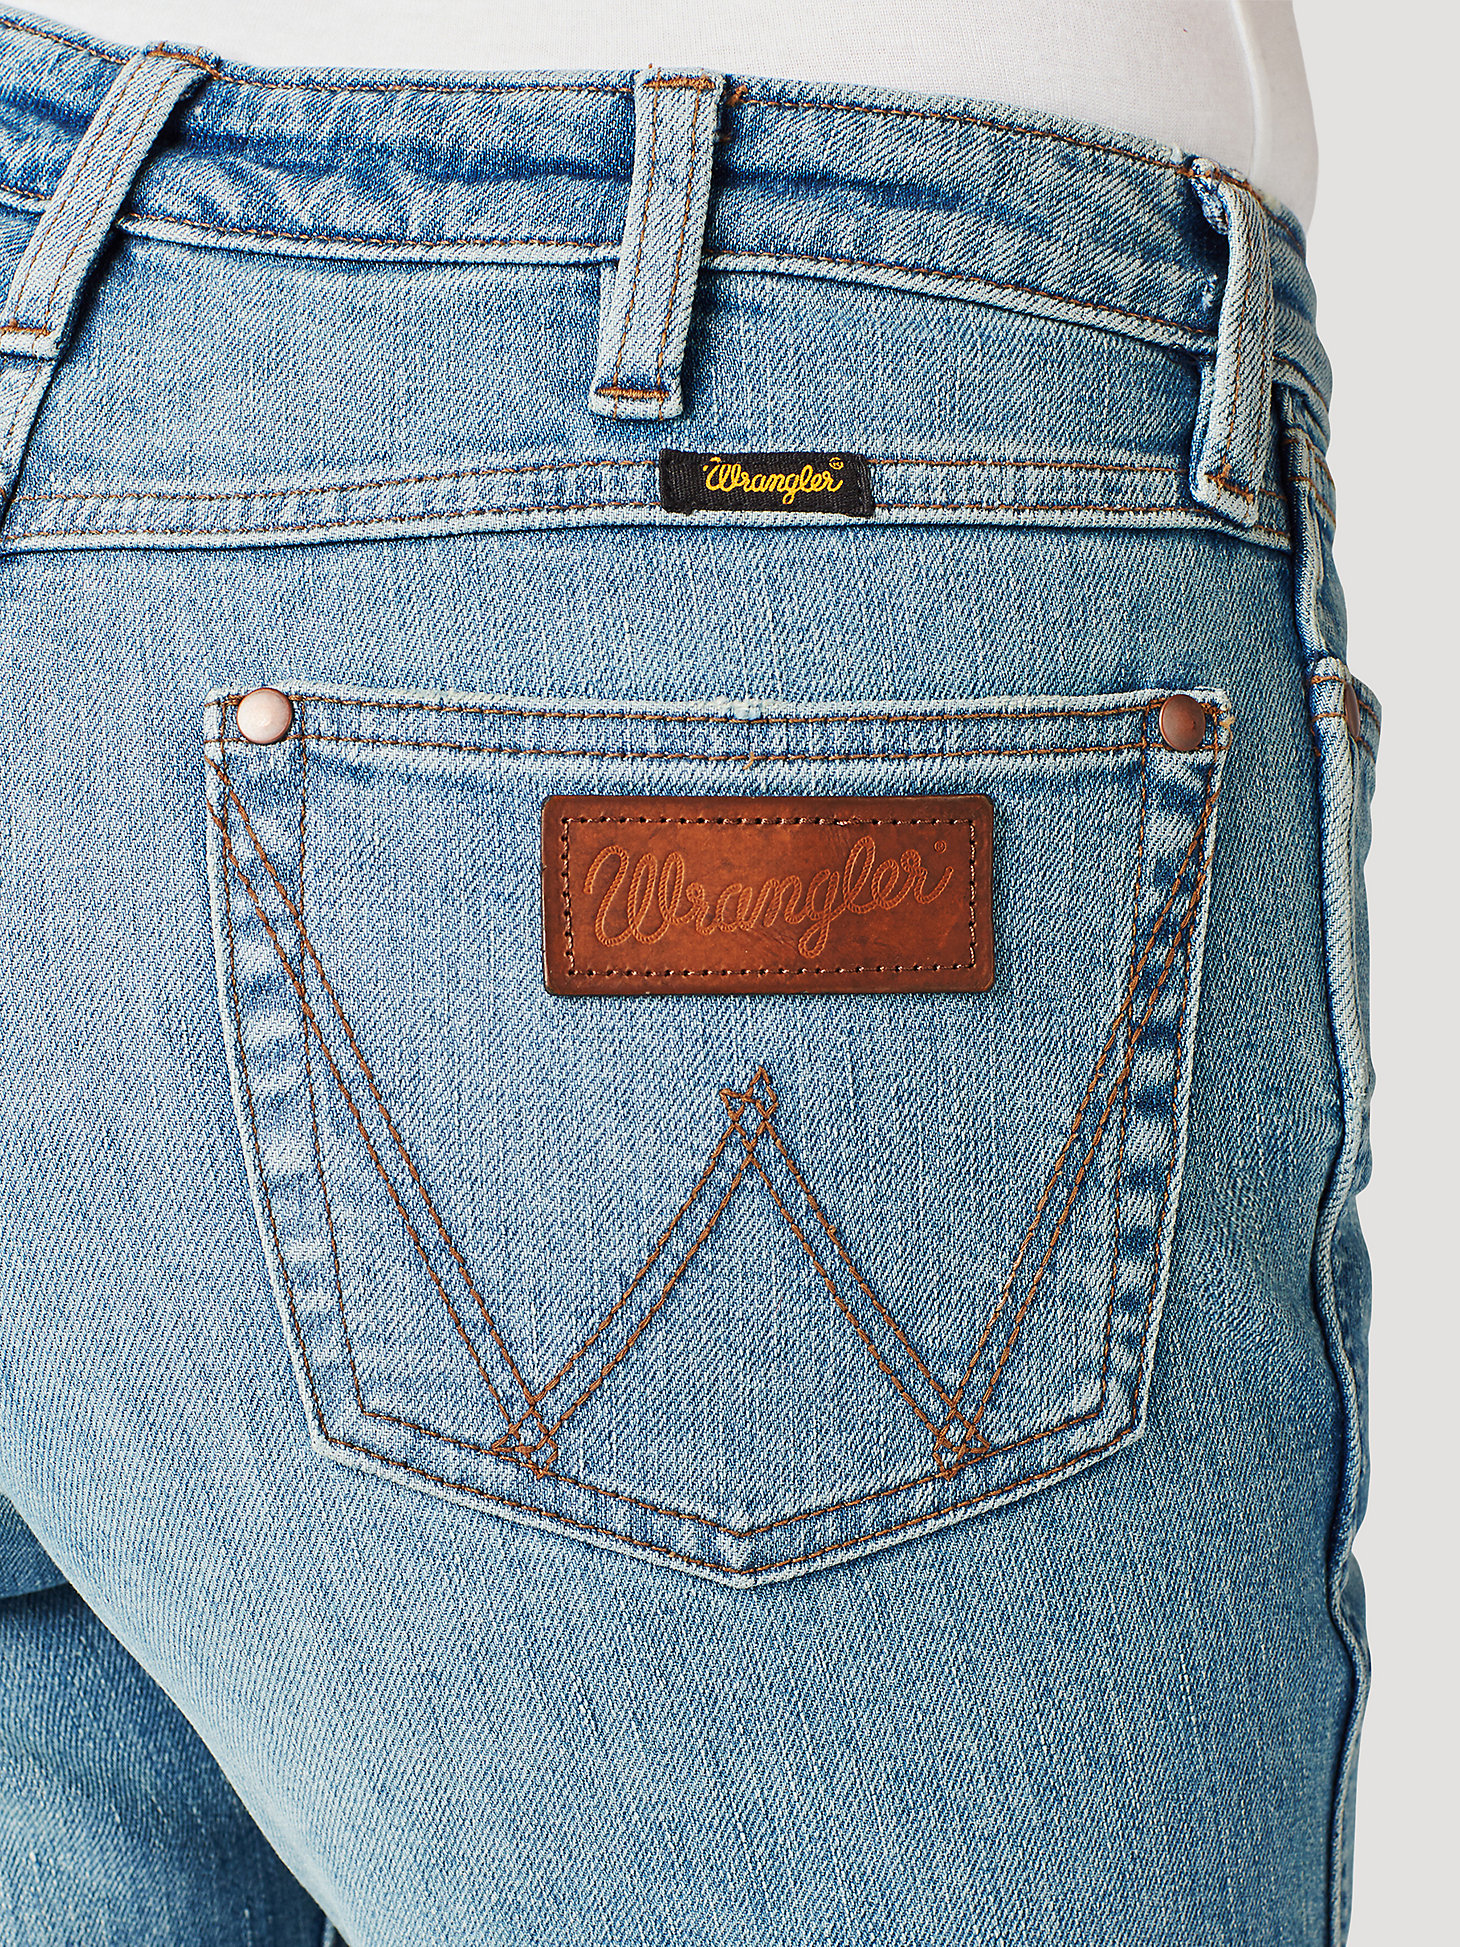 The Wrangler Retro® Premium Jean: Women's High Rise Trouser in Emma alternative view 3